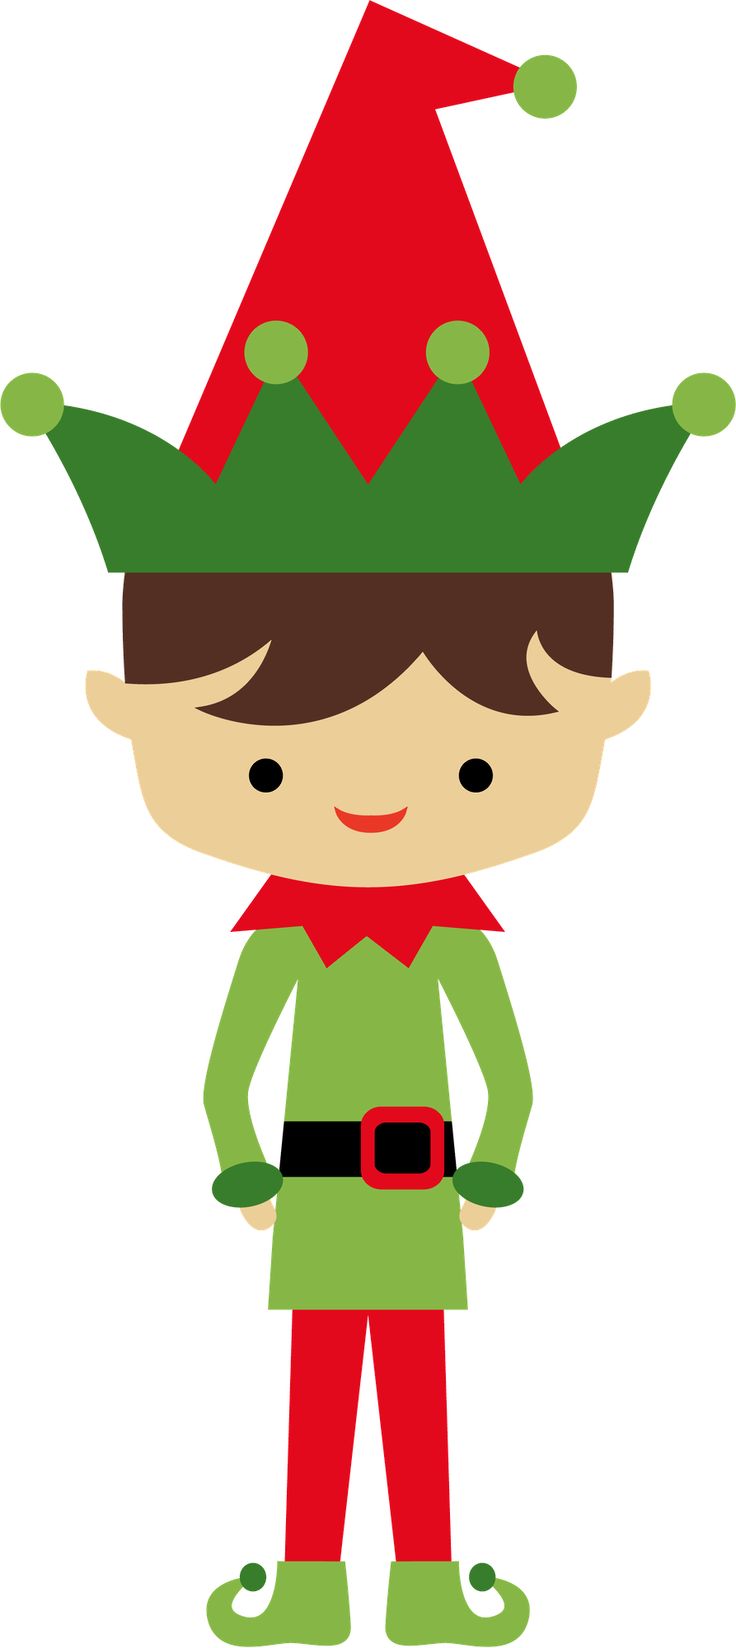 Sitting Christmas Elf Clipart